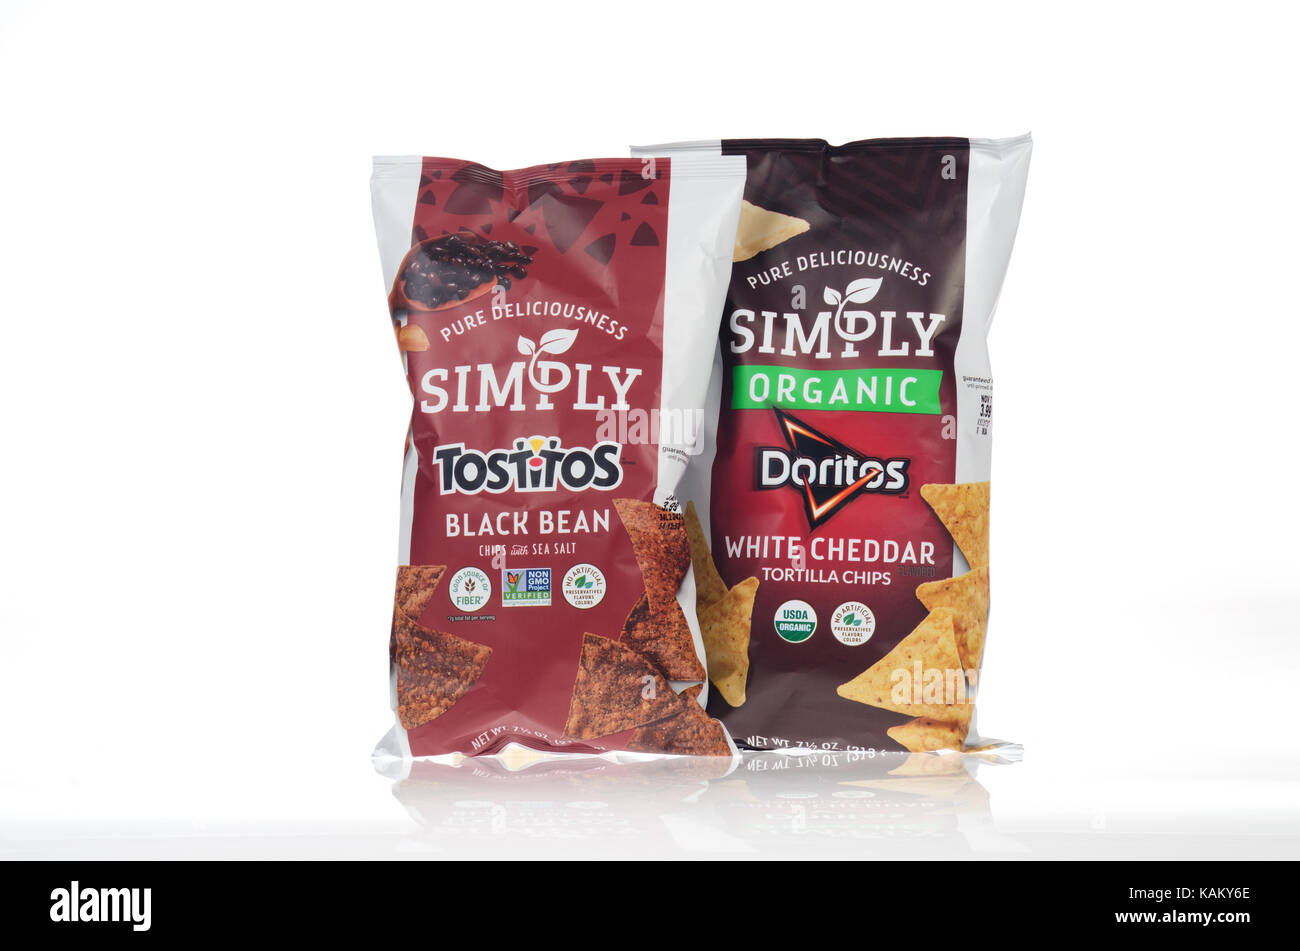 Bags of Frito Lay Simply Tostitos black bean chips and Simply Organic Doritos Stock Photo